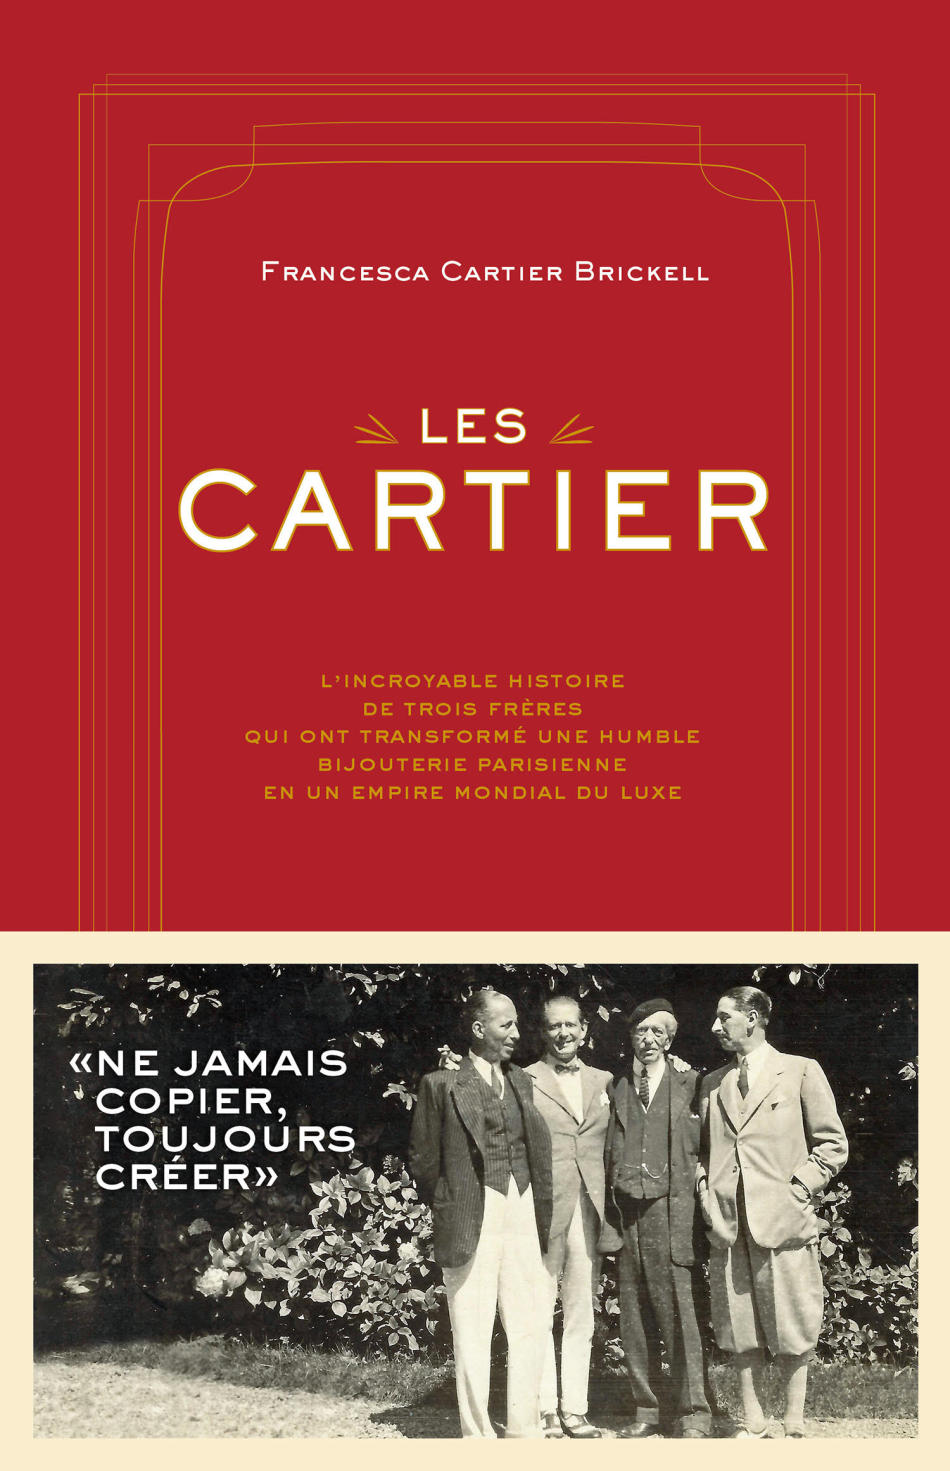 Les Cartier de Francesca Cartier Brickell : histoires de famille